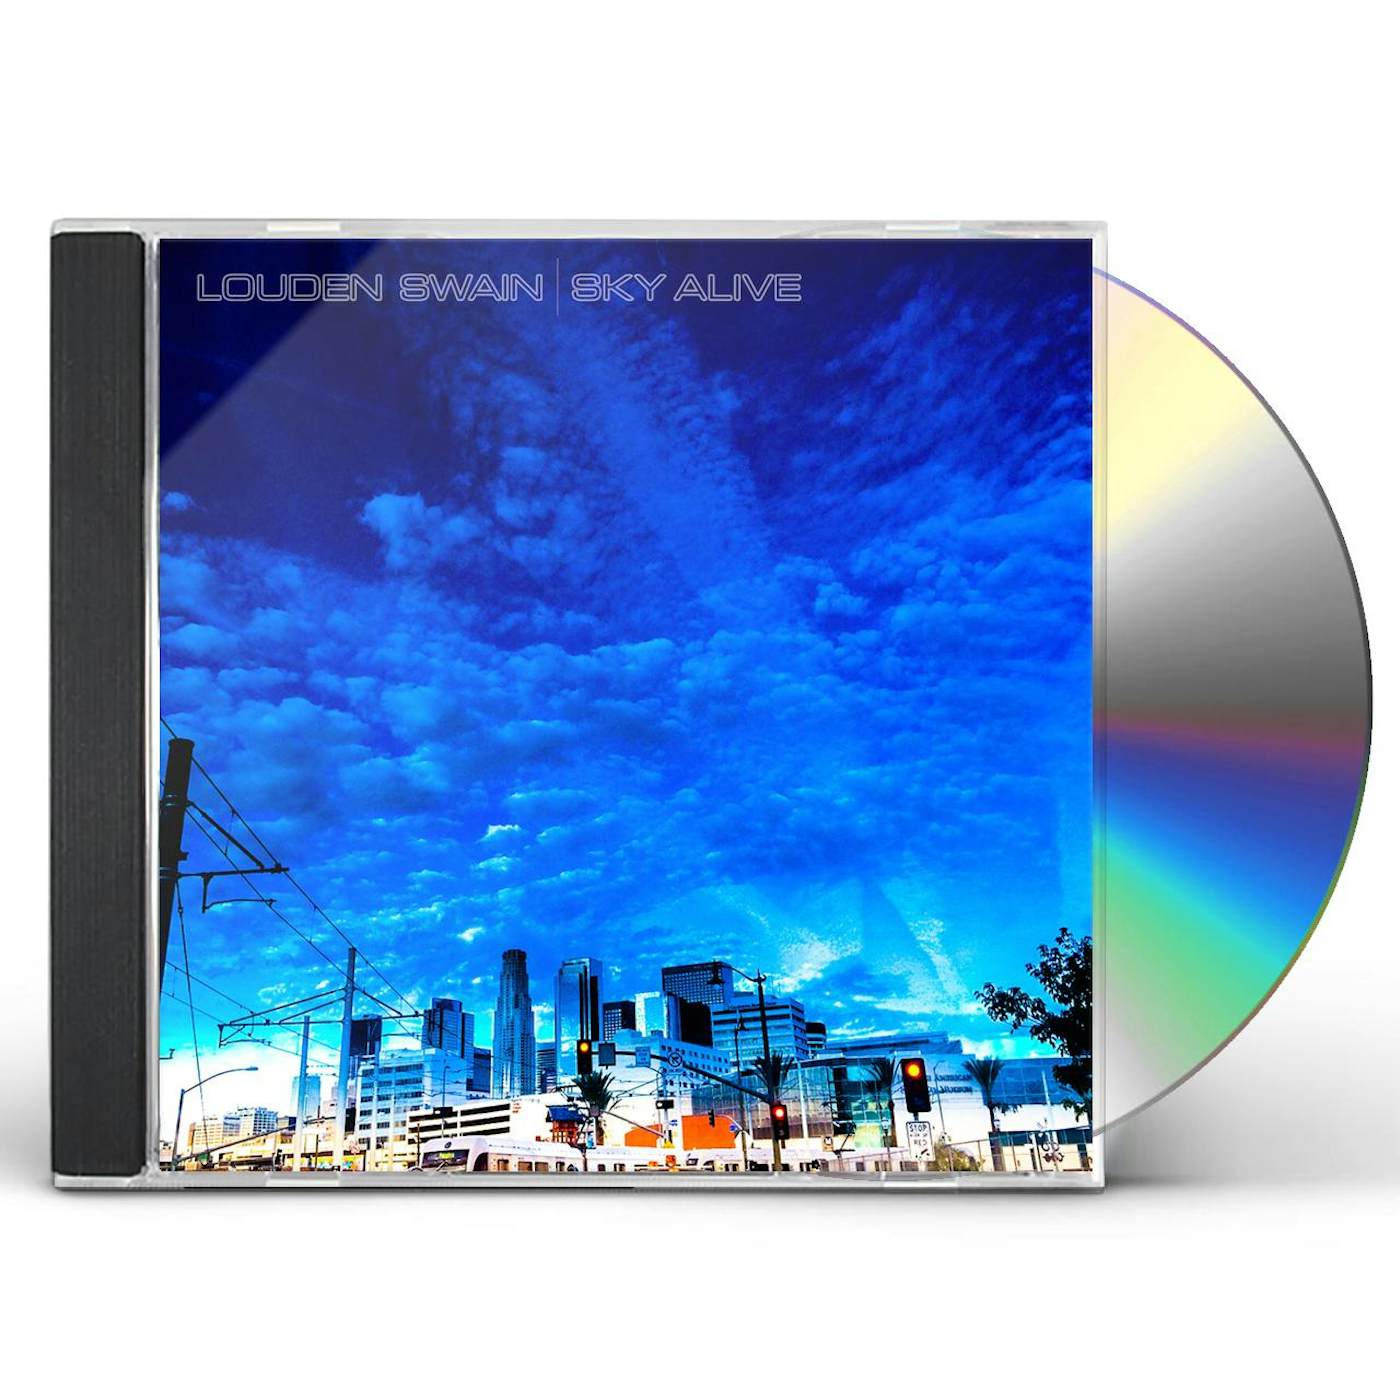 Louden Swain SKY ALIVE CD